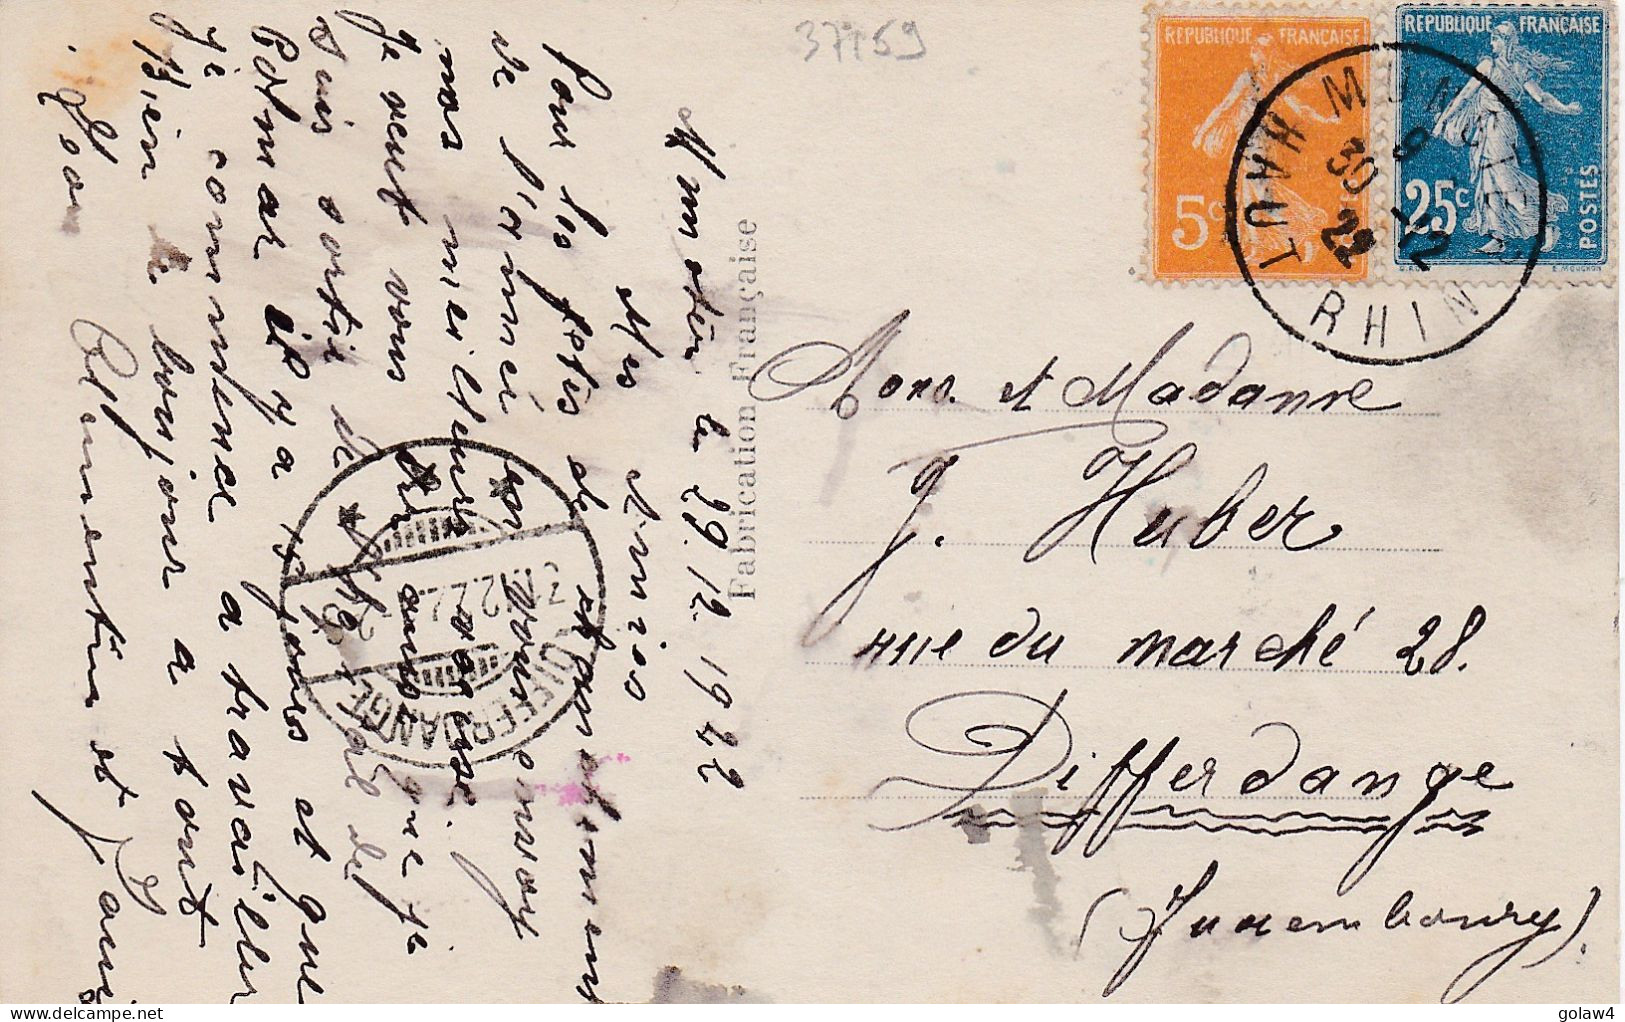 37159# SEMEUSE CARTE POSTALE Obl MUNSTER HAUT RHIN 1922 ALSACE Pour DIFFERDANGE LUXEMBOURG - Covers & Documents